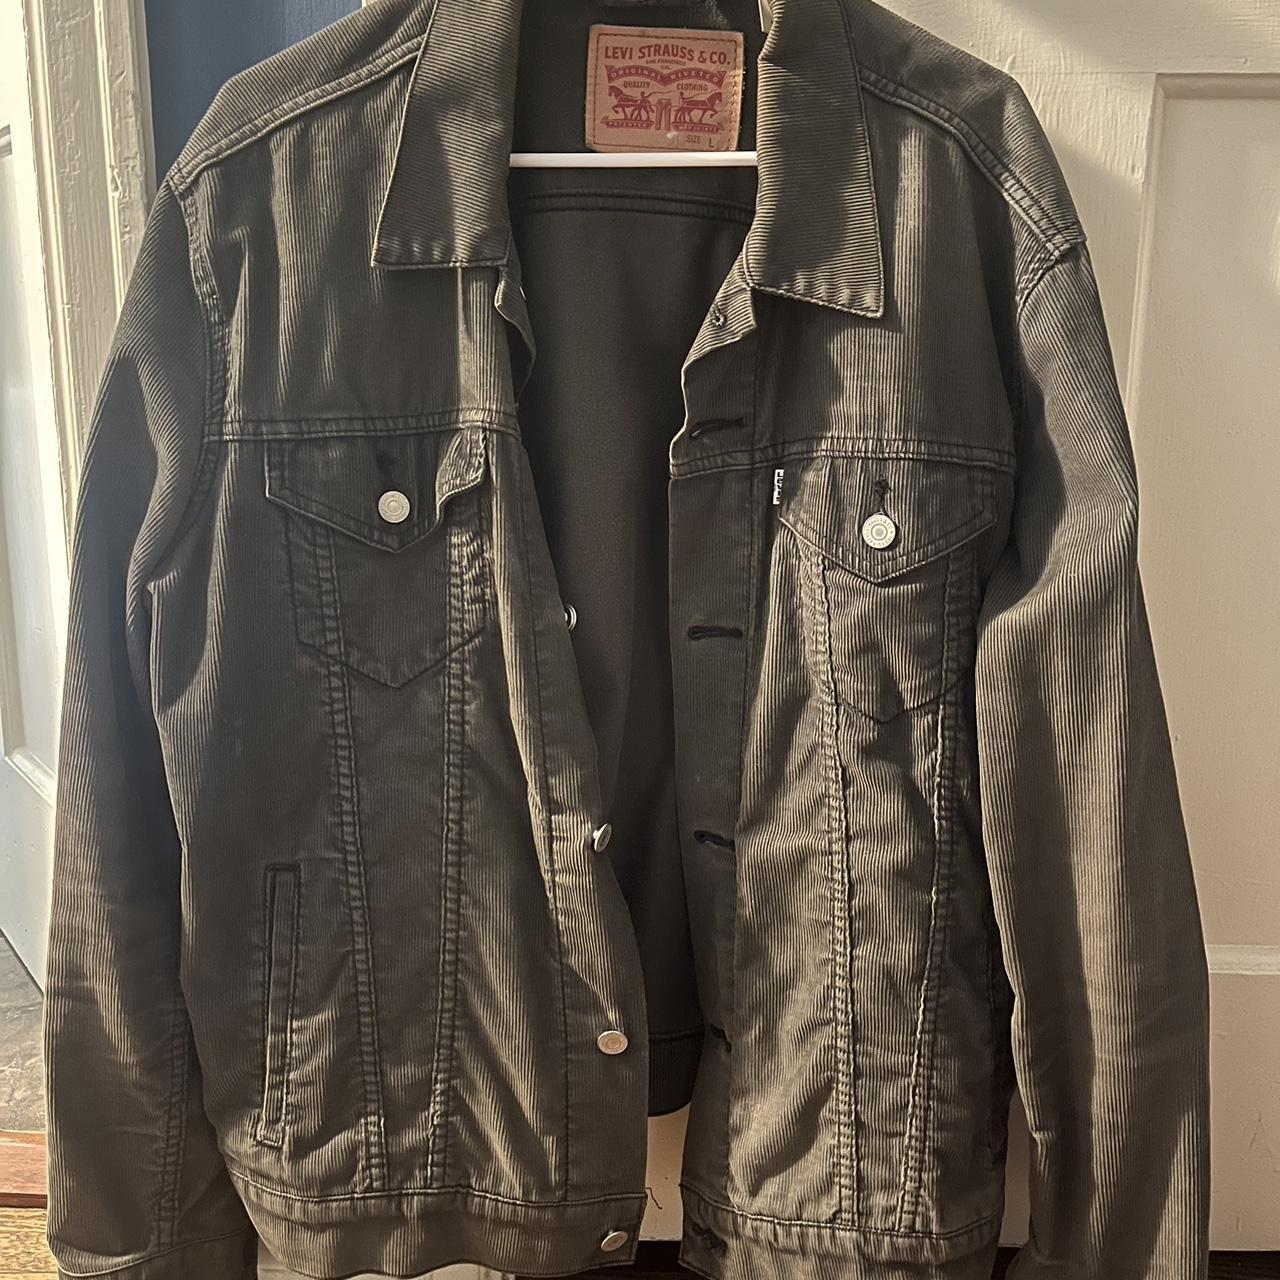 2000s Levi’s corduroy jacket Size large has a great... - Depop